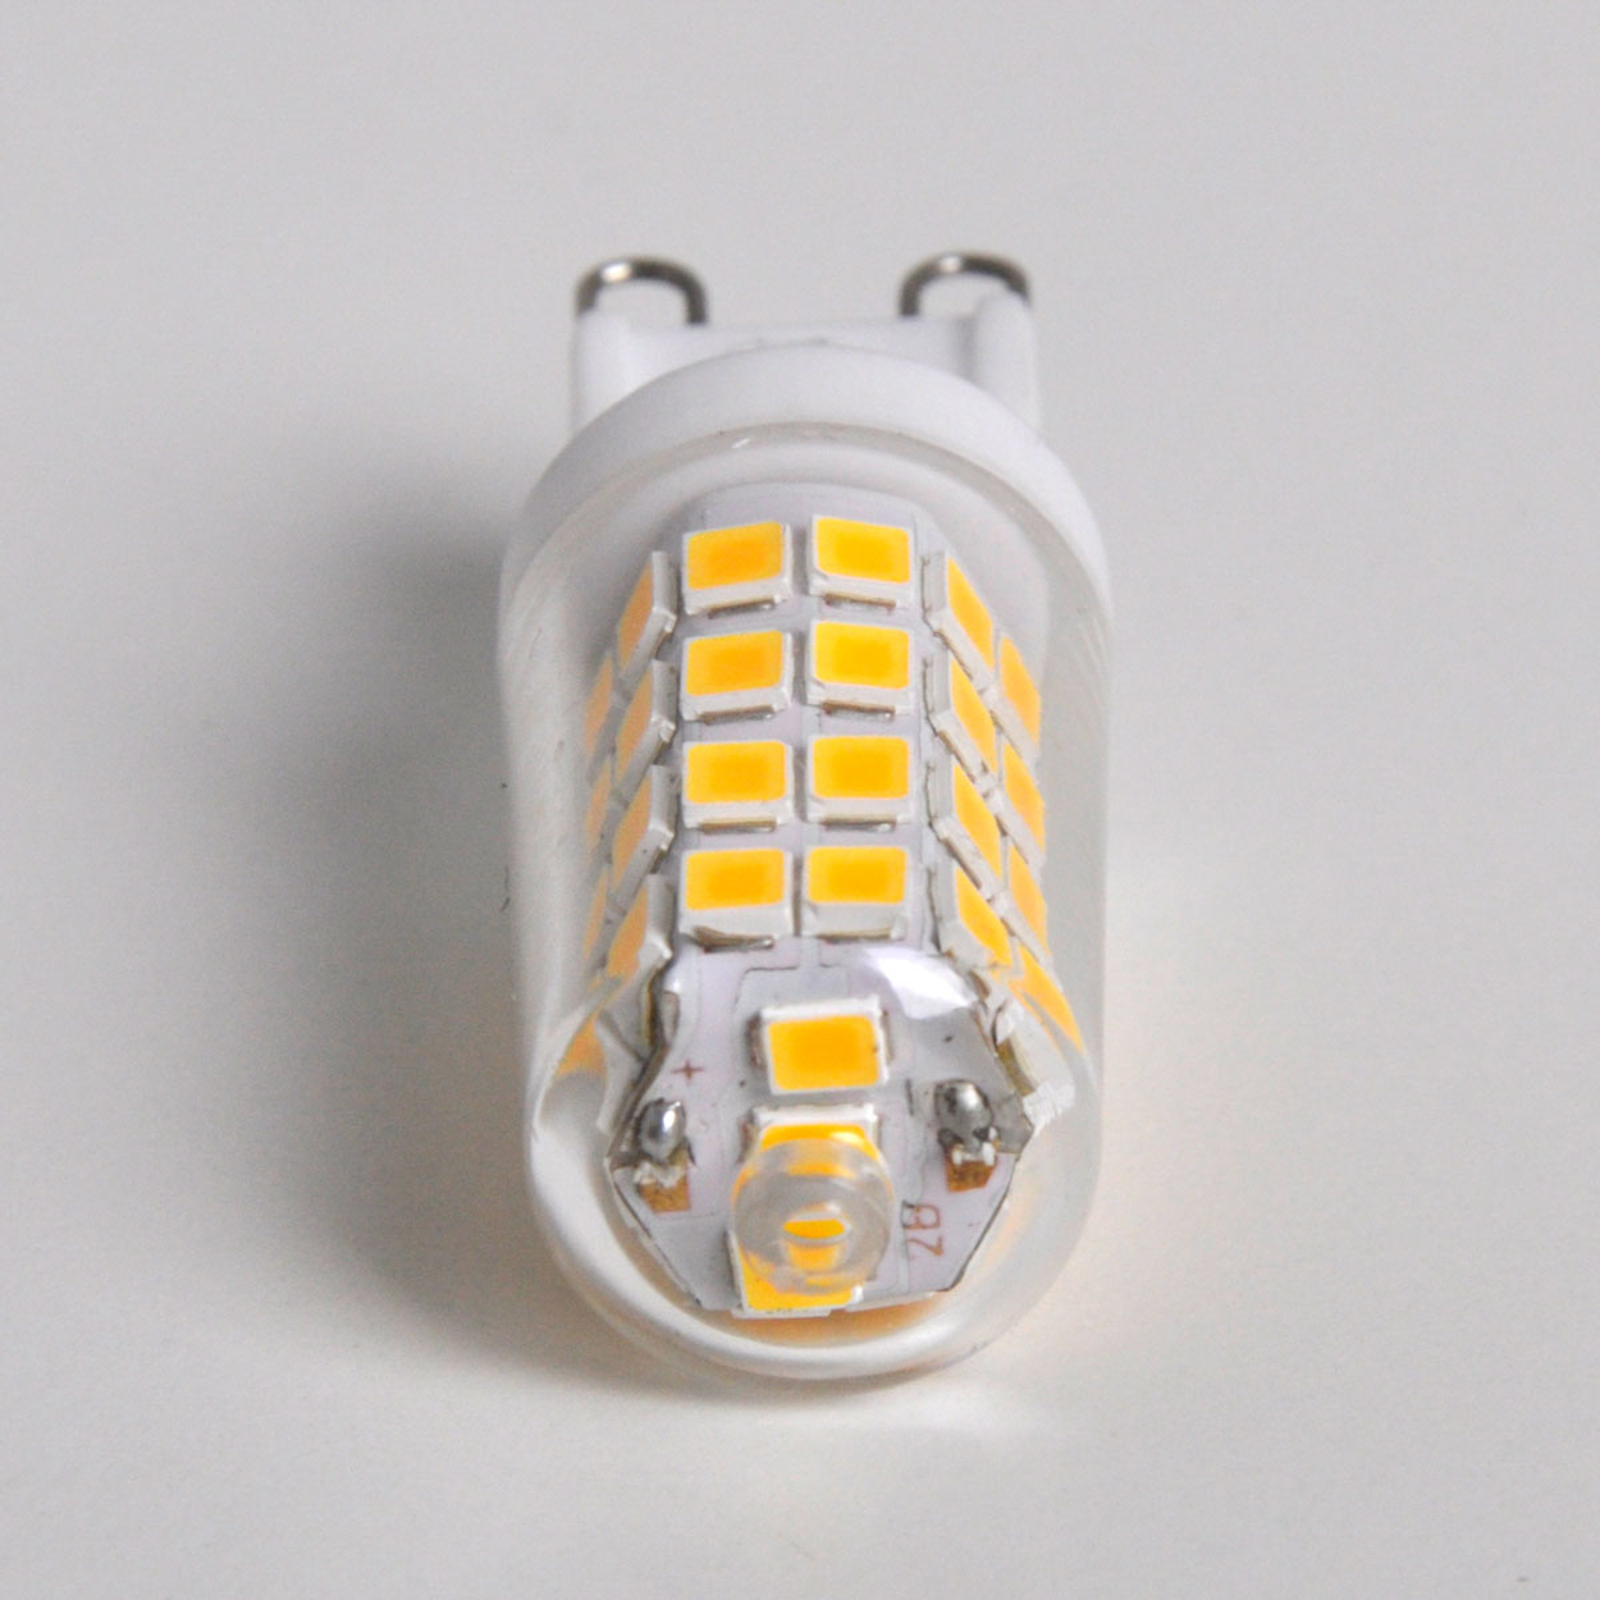 LED stiftlamp G9 3W, warmwit, 330 lumen 5 per set